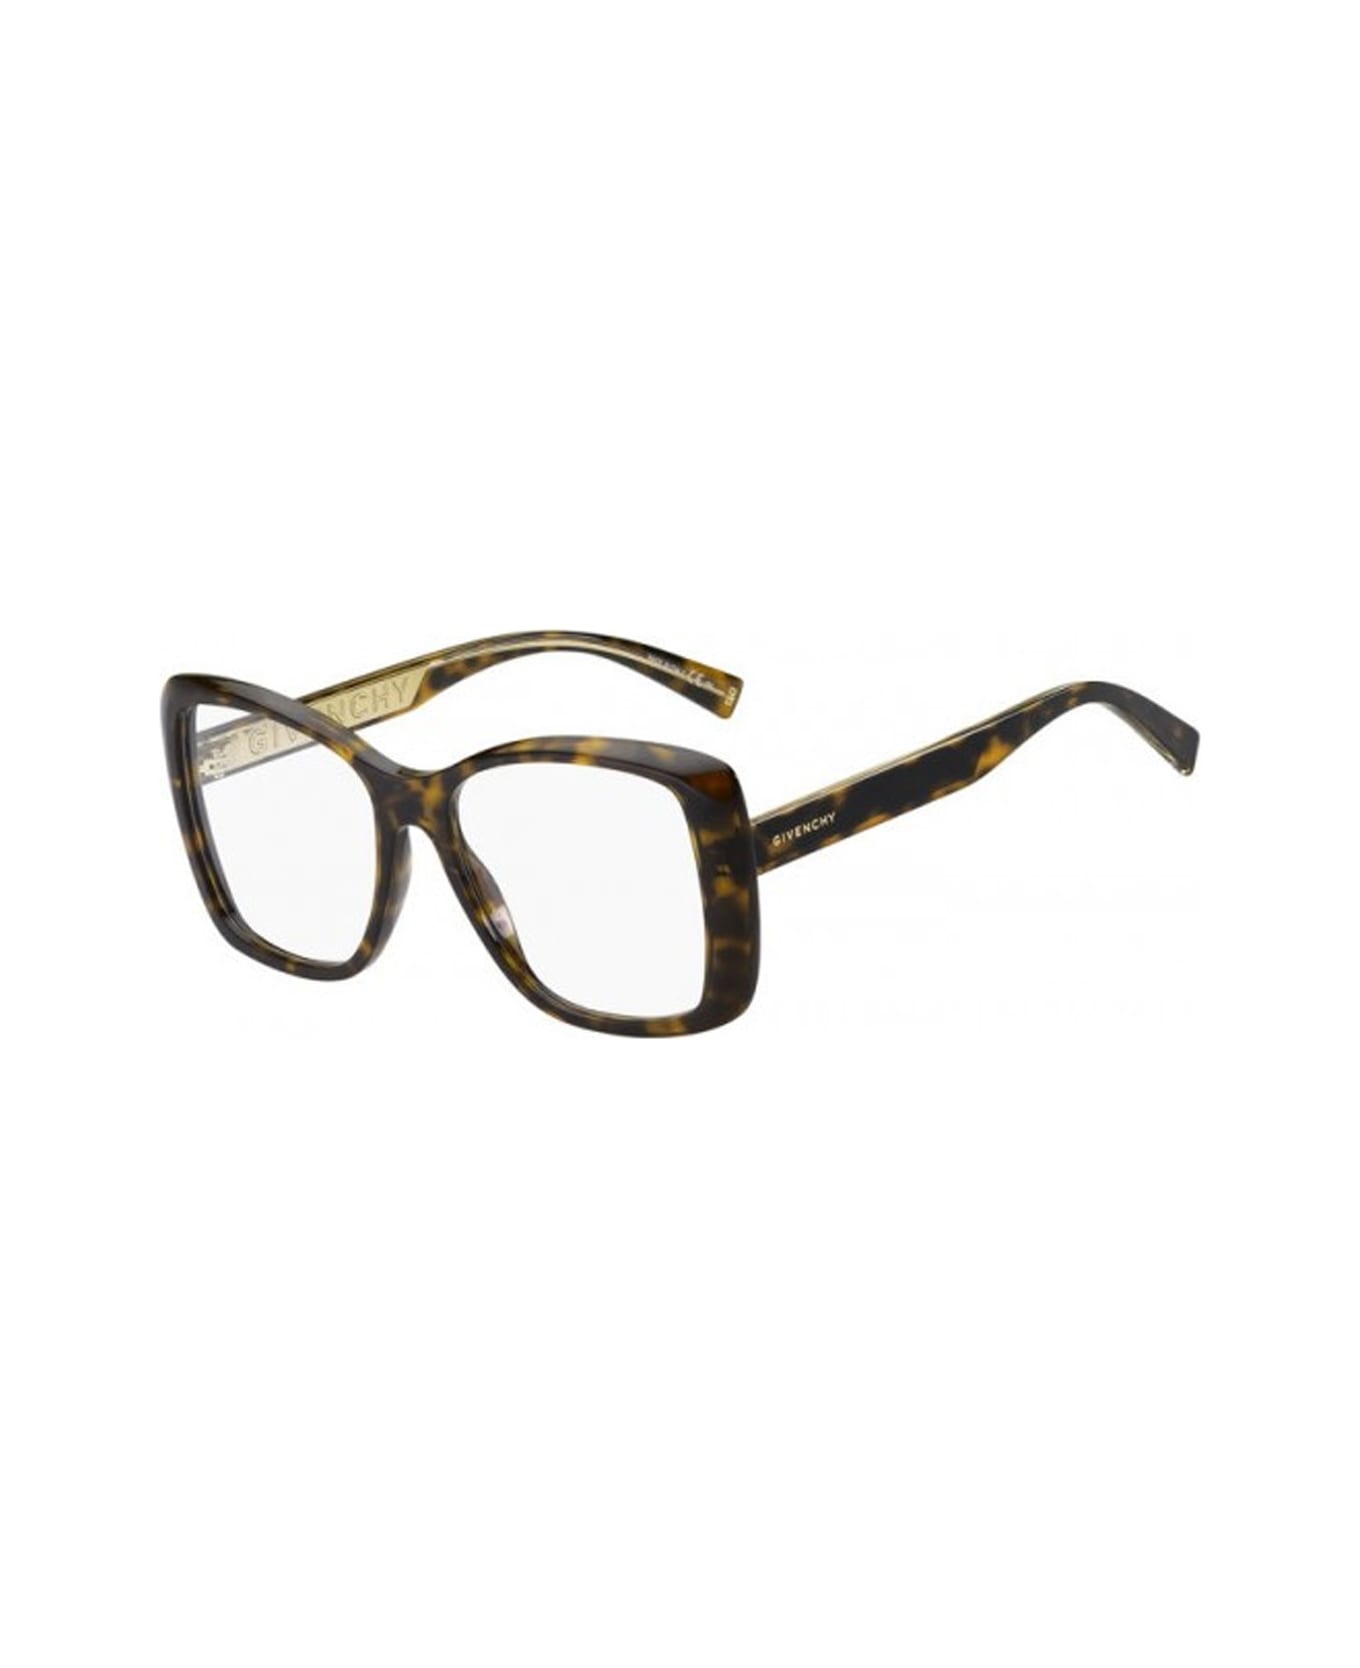 Givenchy Eyewear Gv 0135 Glasses - Marrone